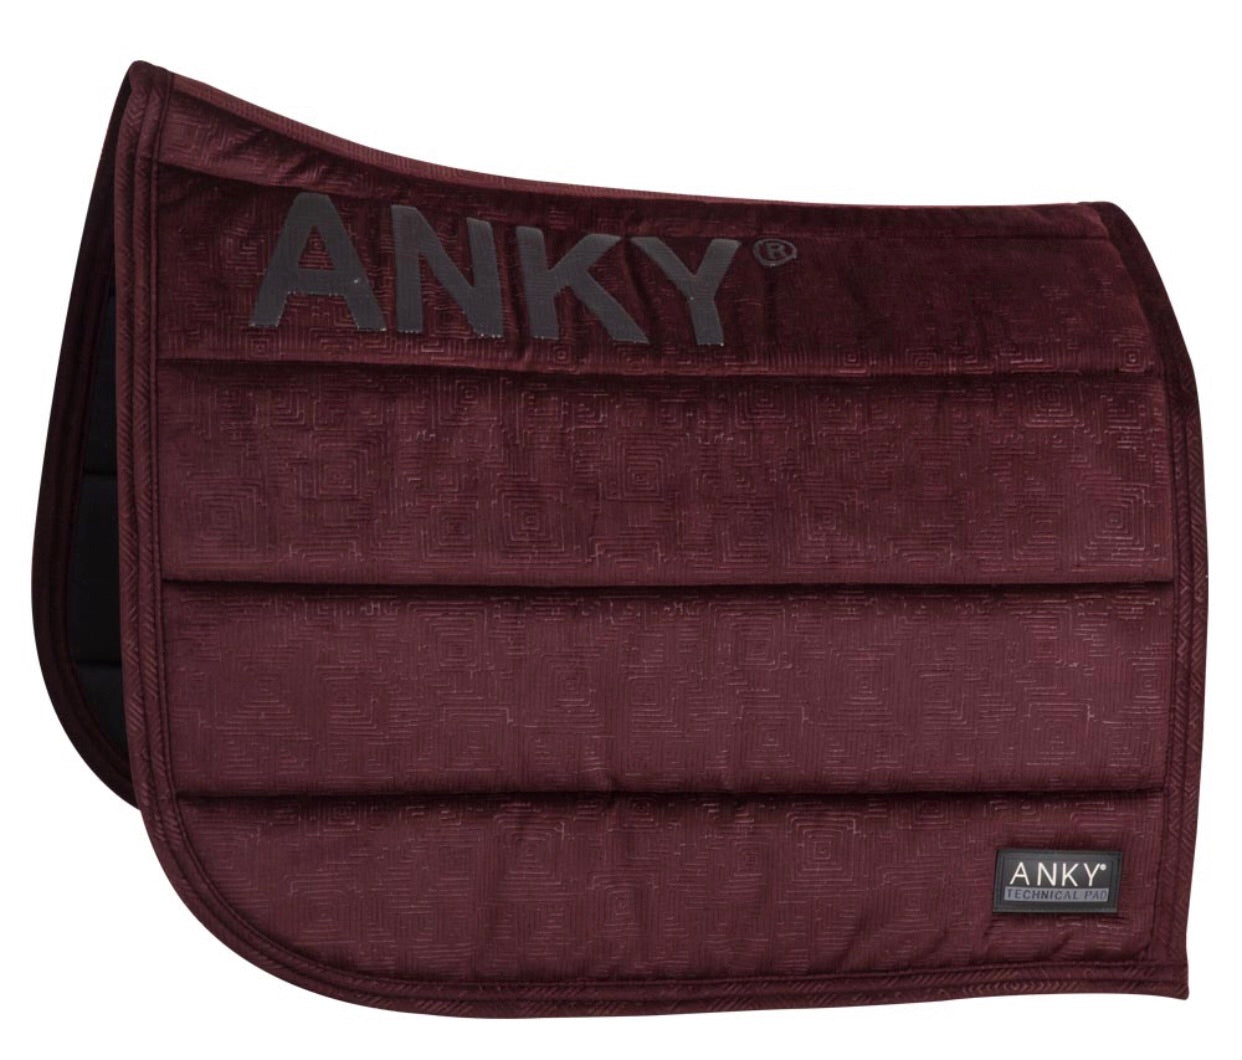 Anky Velvet limited Edition